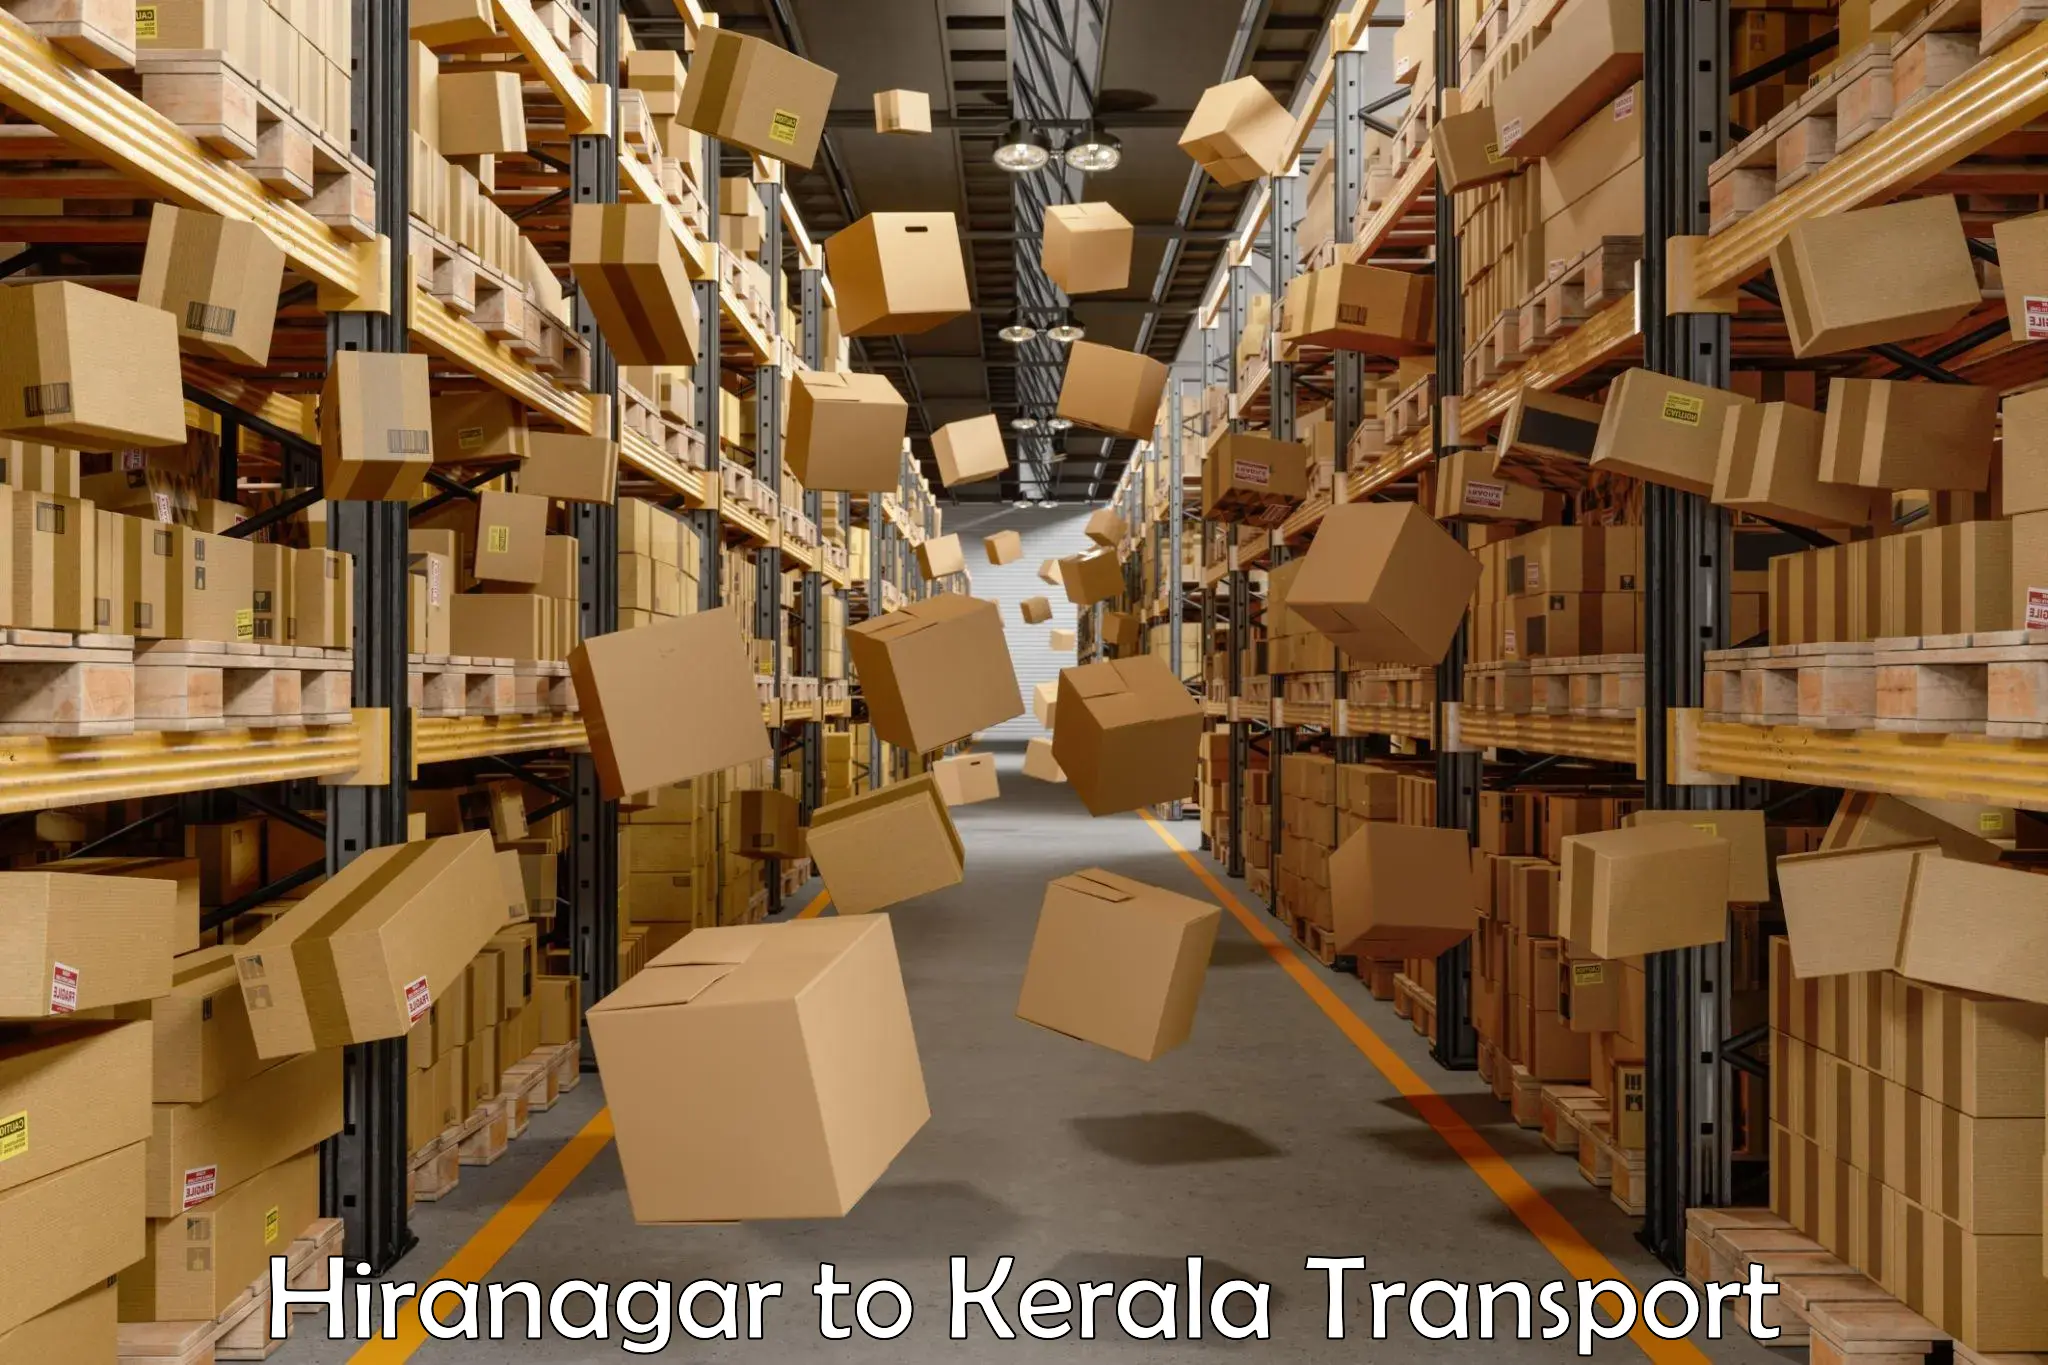 Pick up transport service Hiranagar to Ernakulam